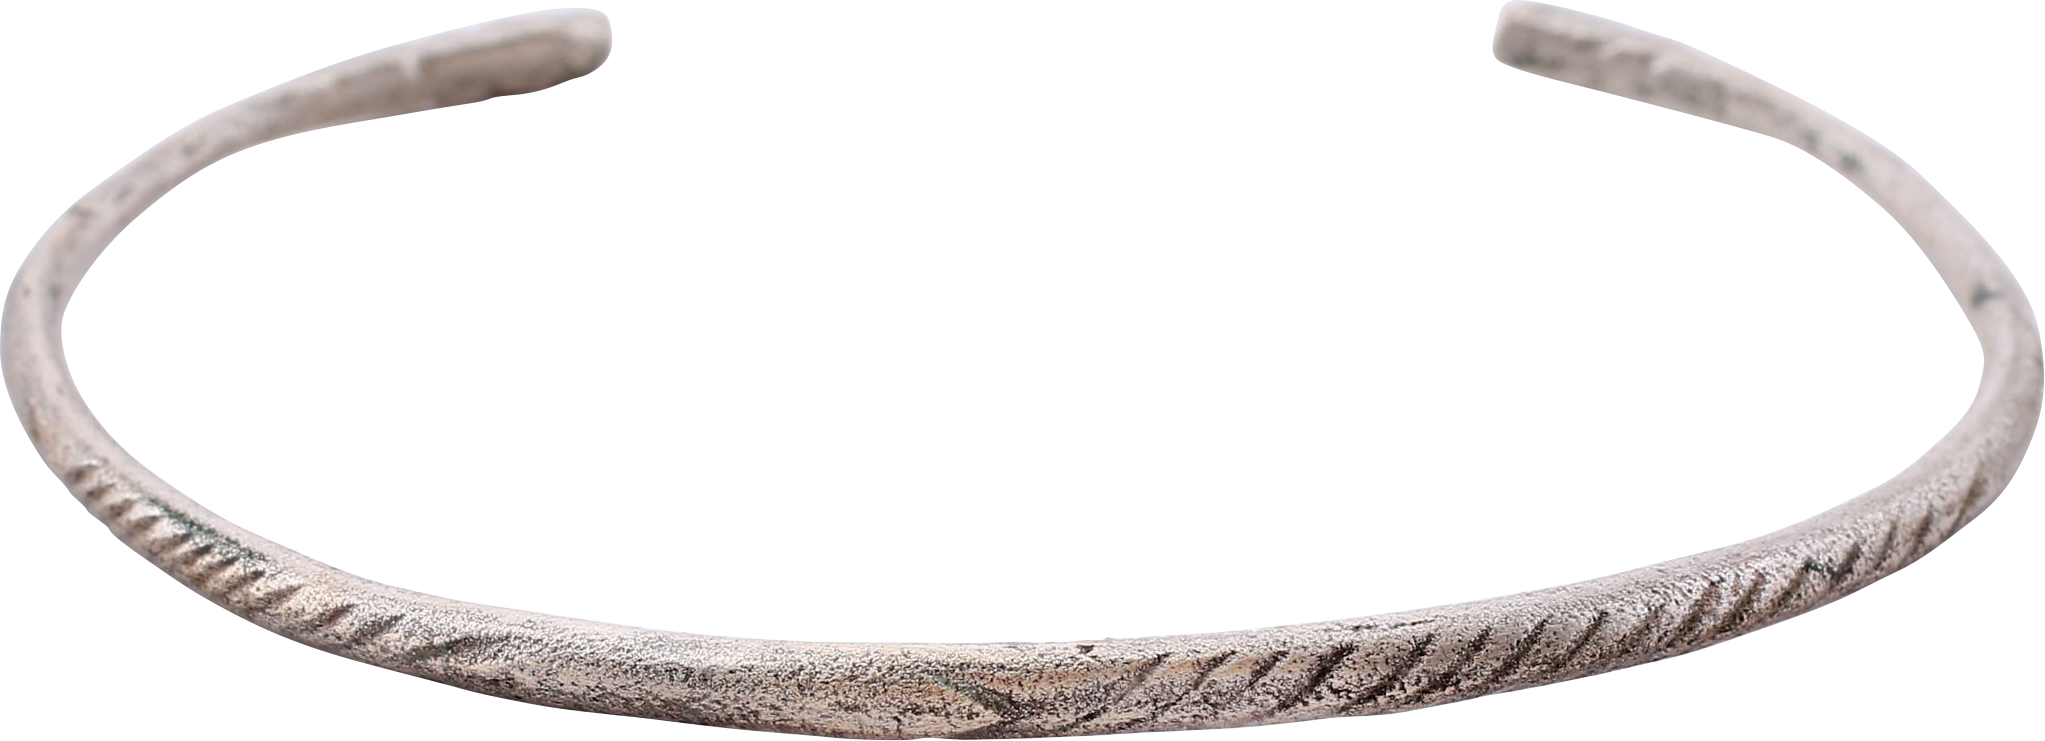 ANCIENT ROMAN BRACELET, 1ST-2ND CENTURY AD - Fagan Arms